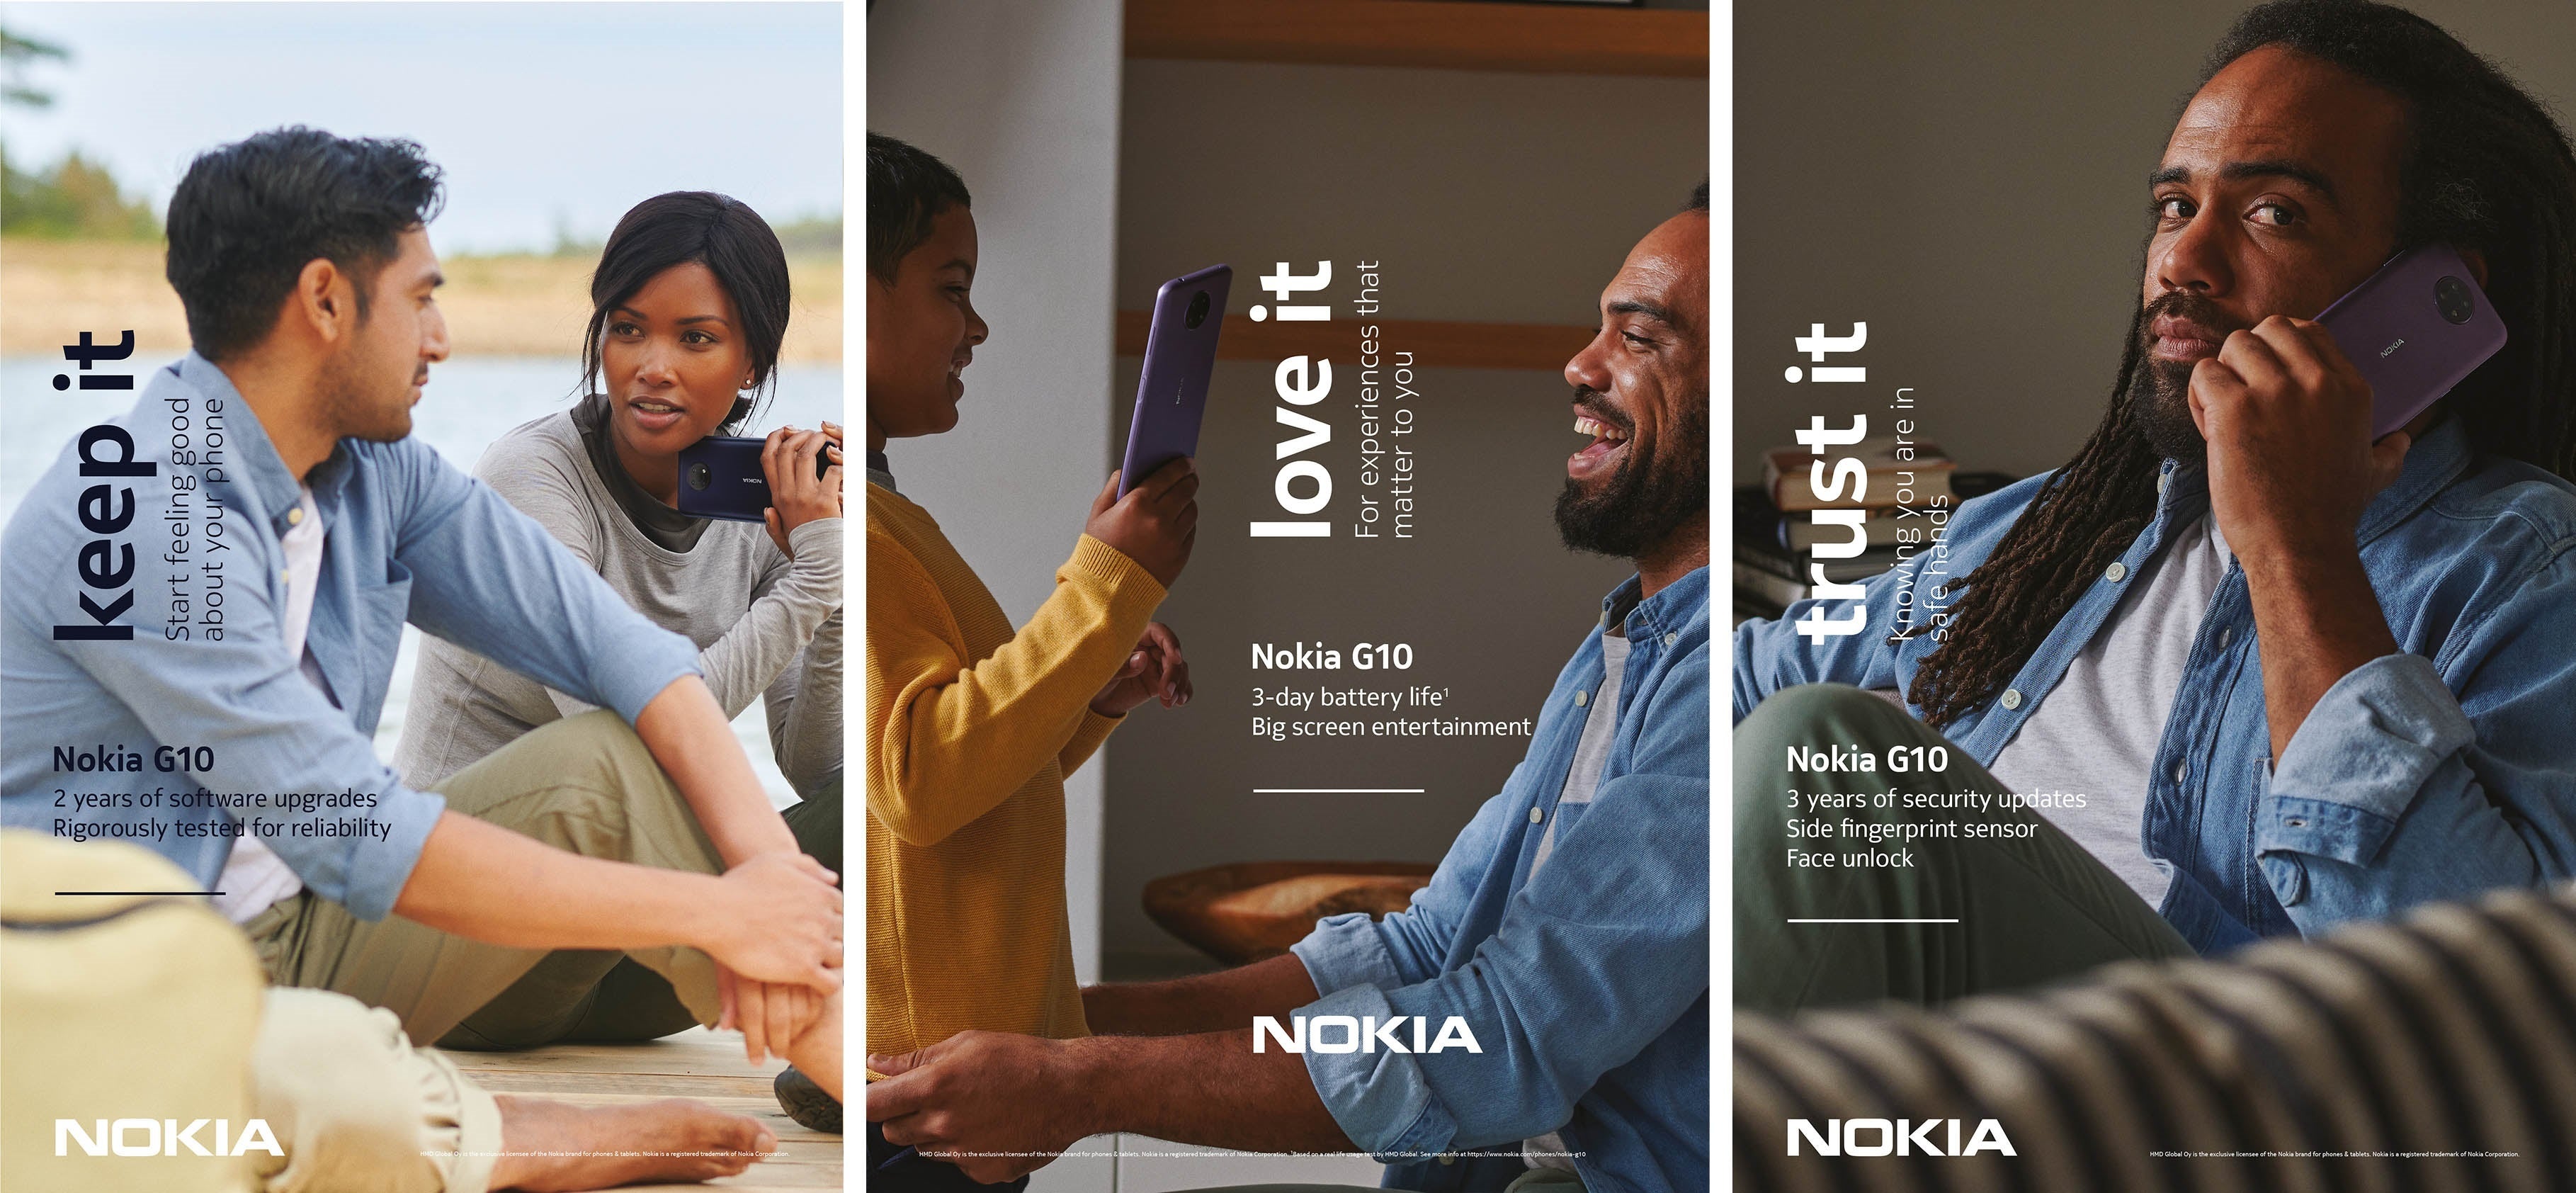 Nokia G10 promo material - Nokia's biggest phone launch introduces 6 new phones, built to last